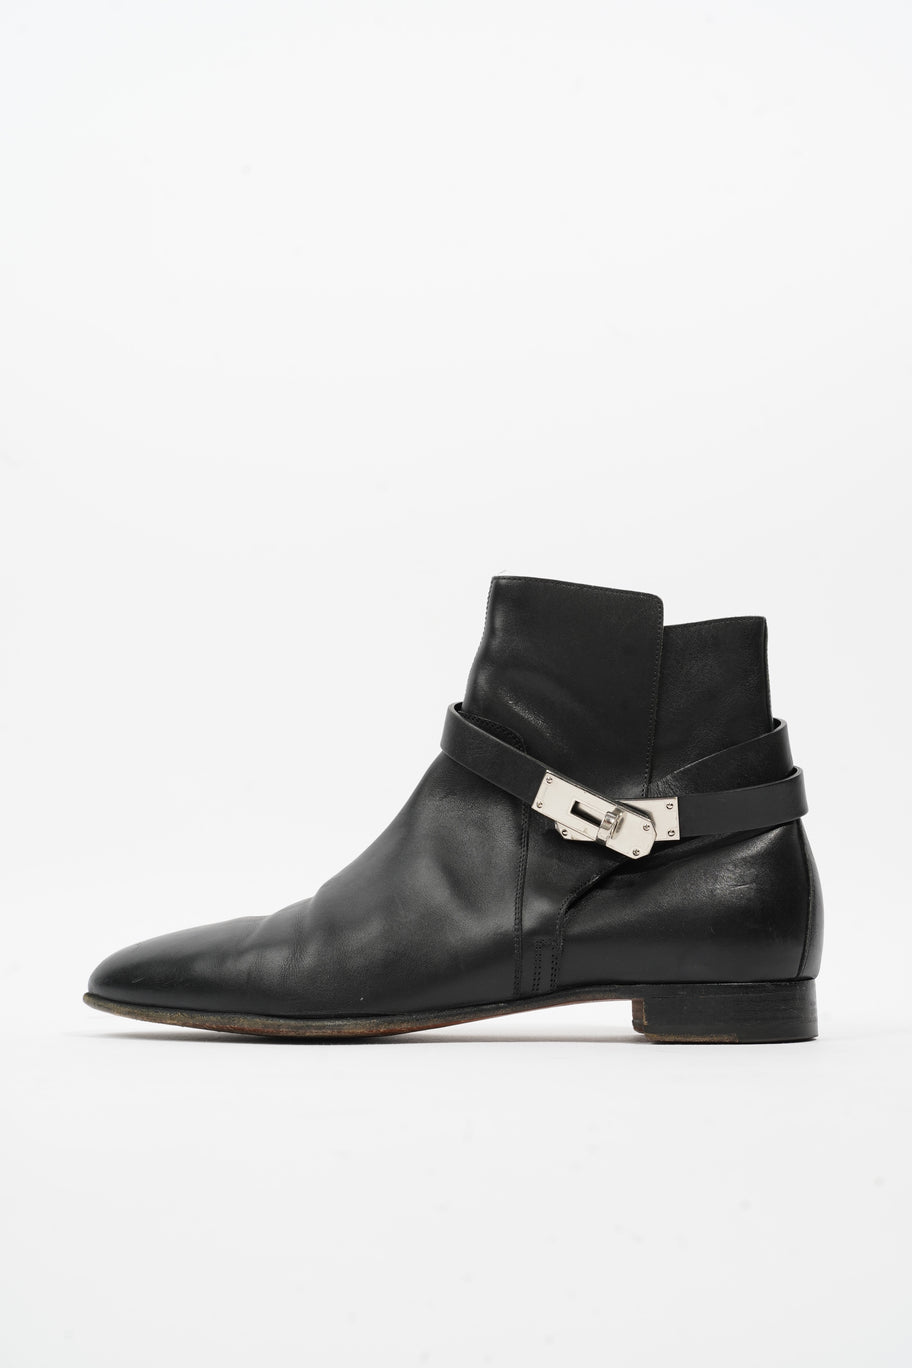 Neo Ankle Boot Black Leather EU 41 UK 8 Image 5